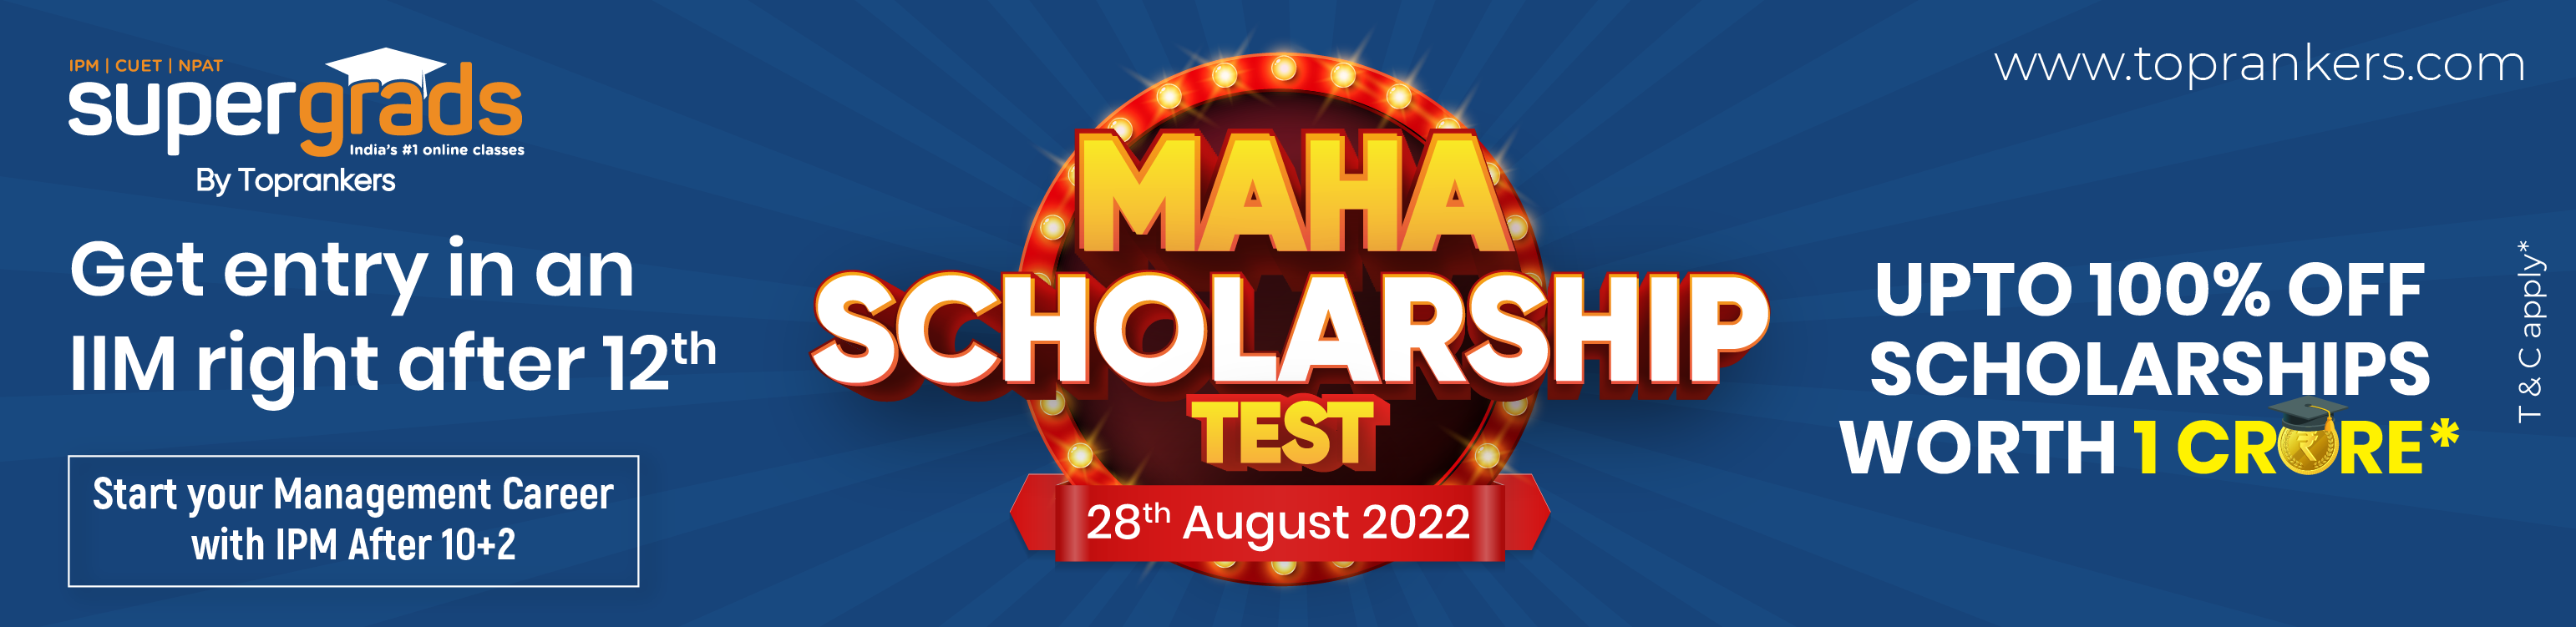 SuperGrads MAHA Scholarship Test 2022